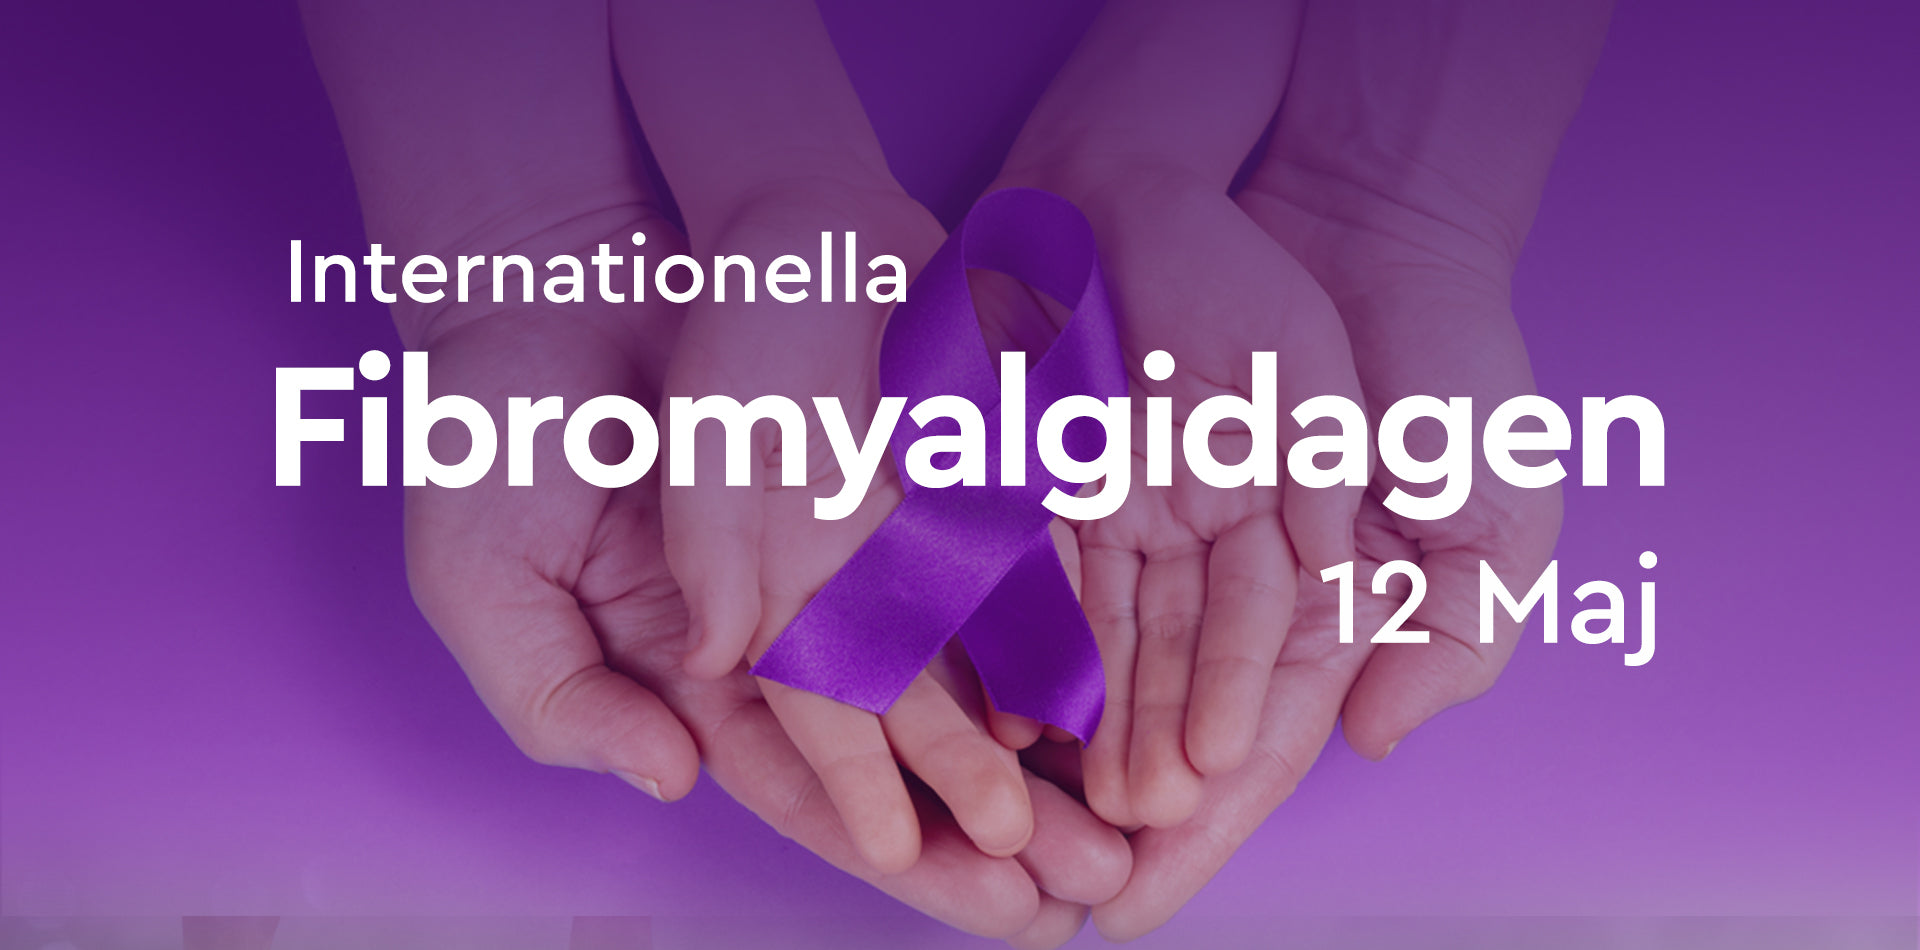 Internationella Fibromyalgidagen 12 Maj